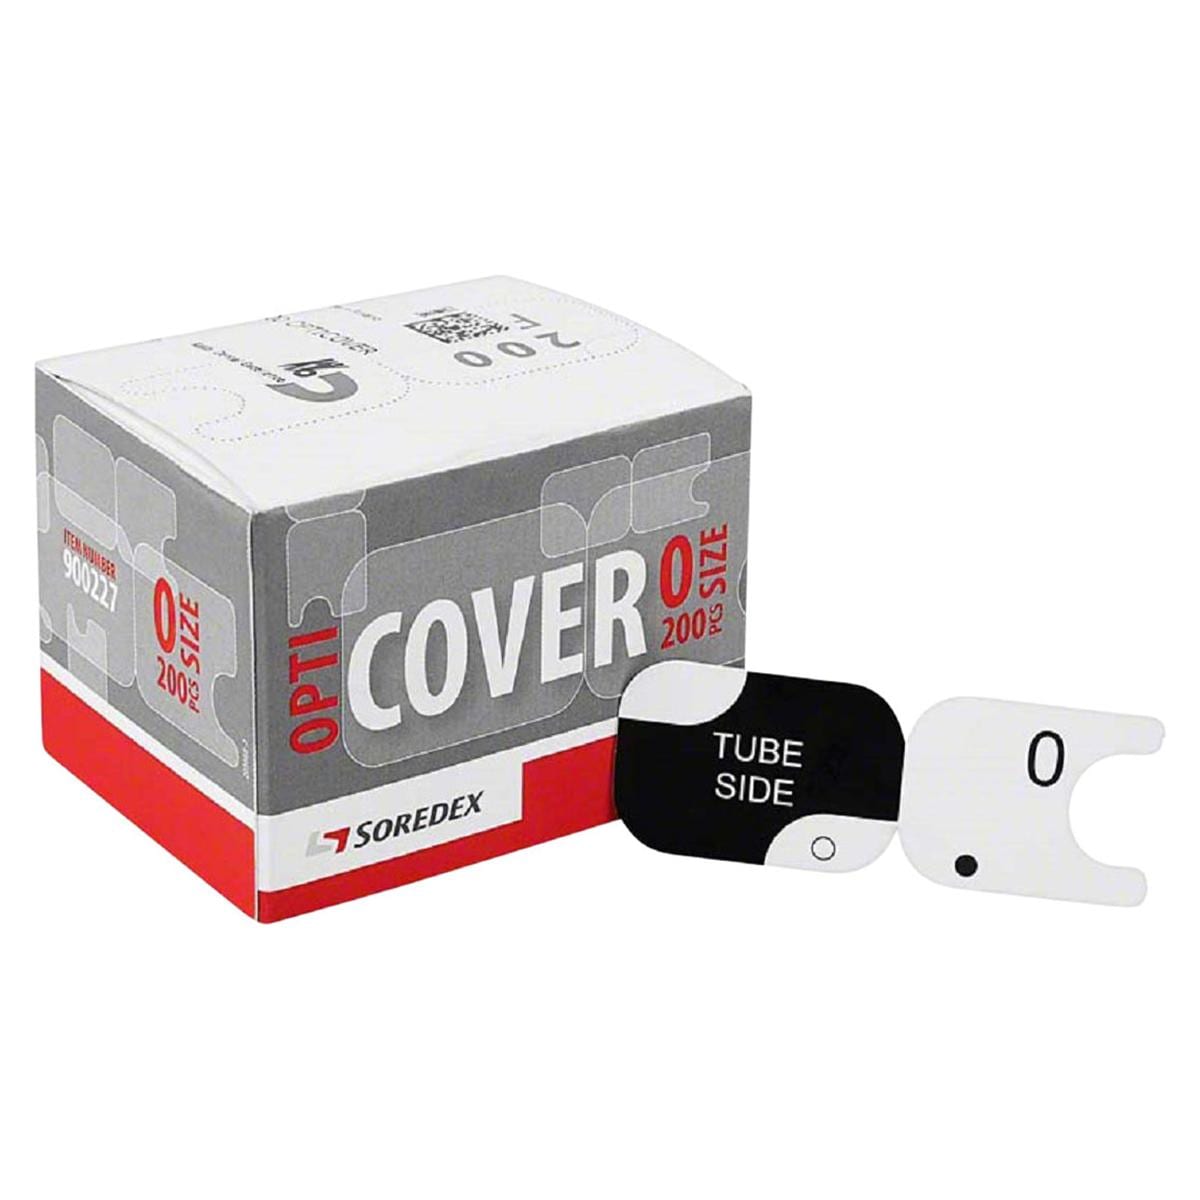 Opticover protection en carton - Taille 0 (2,2 x 3,1 cm), 200 pcs